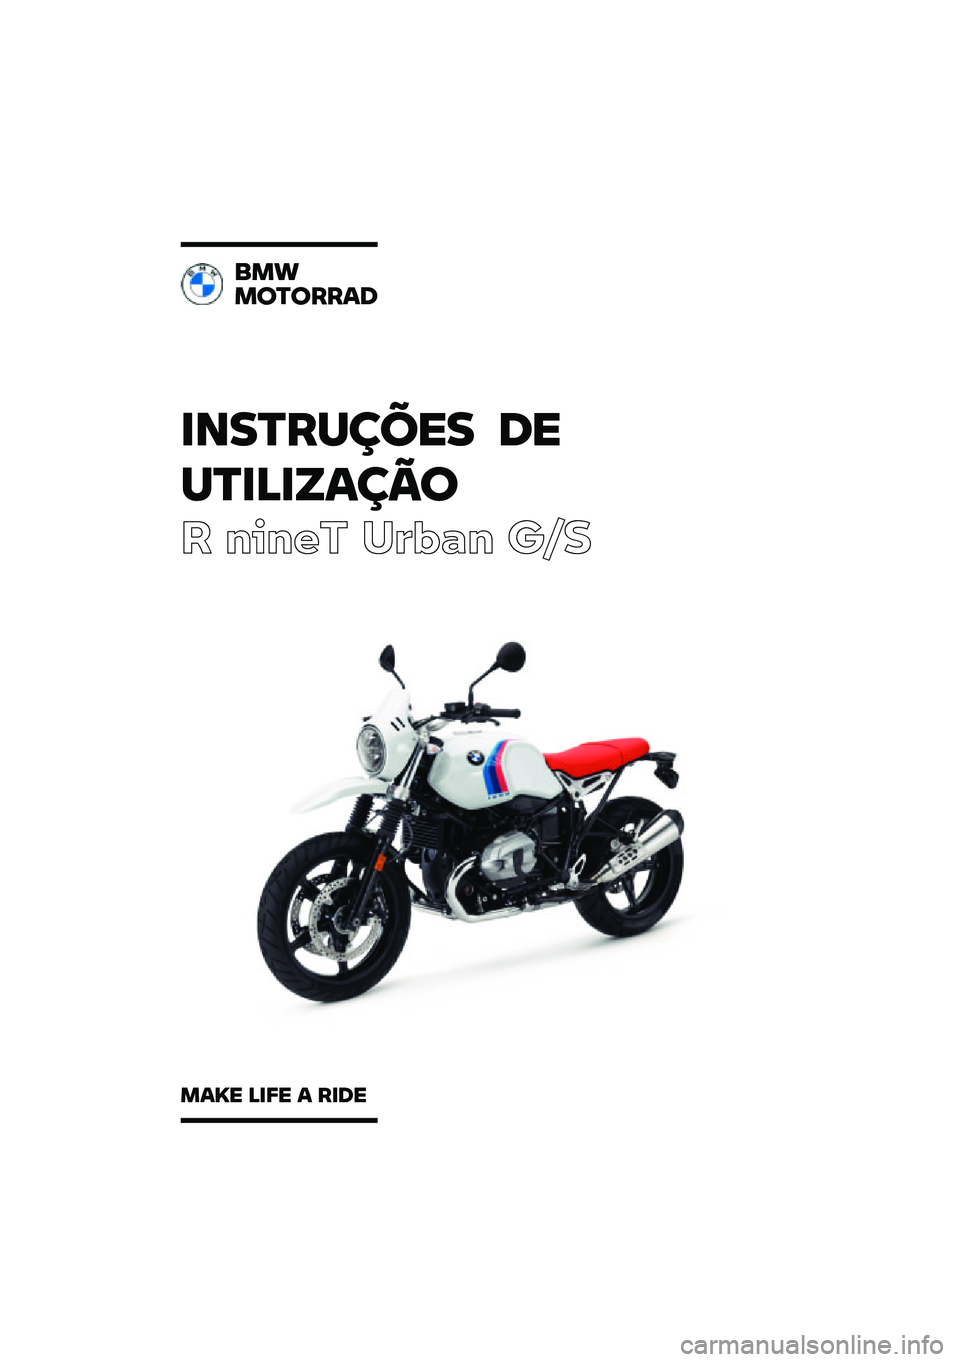 BMW MOTORRAD R NINE T URVAN G/S 2021  Manual do condutor (in Portuguese) �������\b�	�\f� �
�\f
��������\b��

� ����� ��\b�	�
� ��\f�
���
��
��
����
����\f ����\f � ���
�\f 